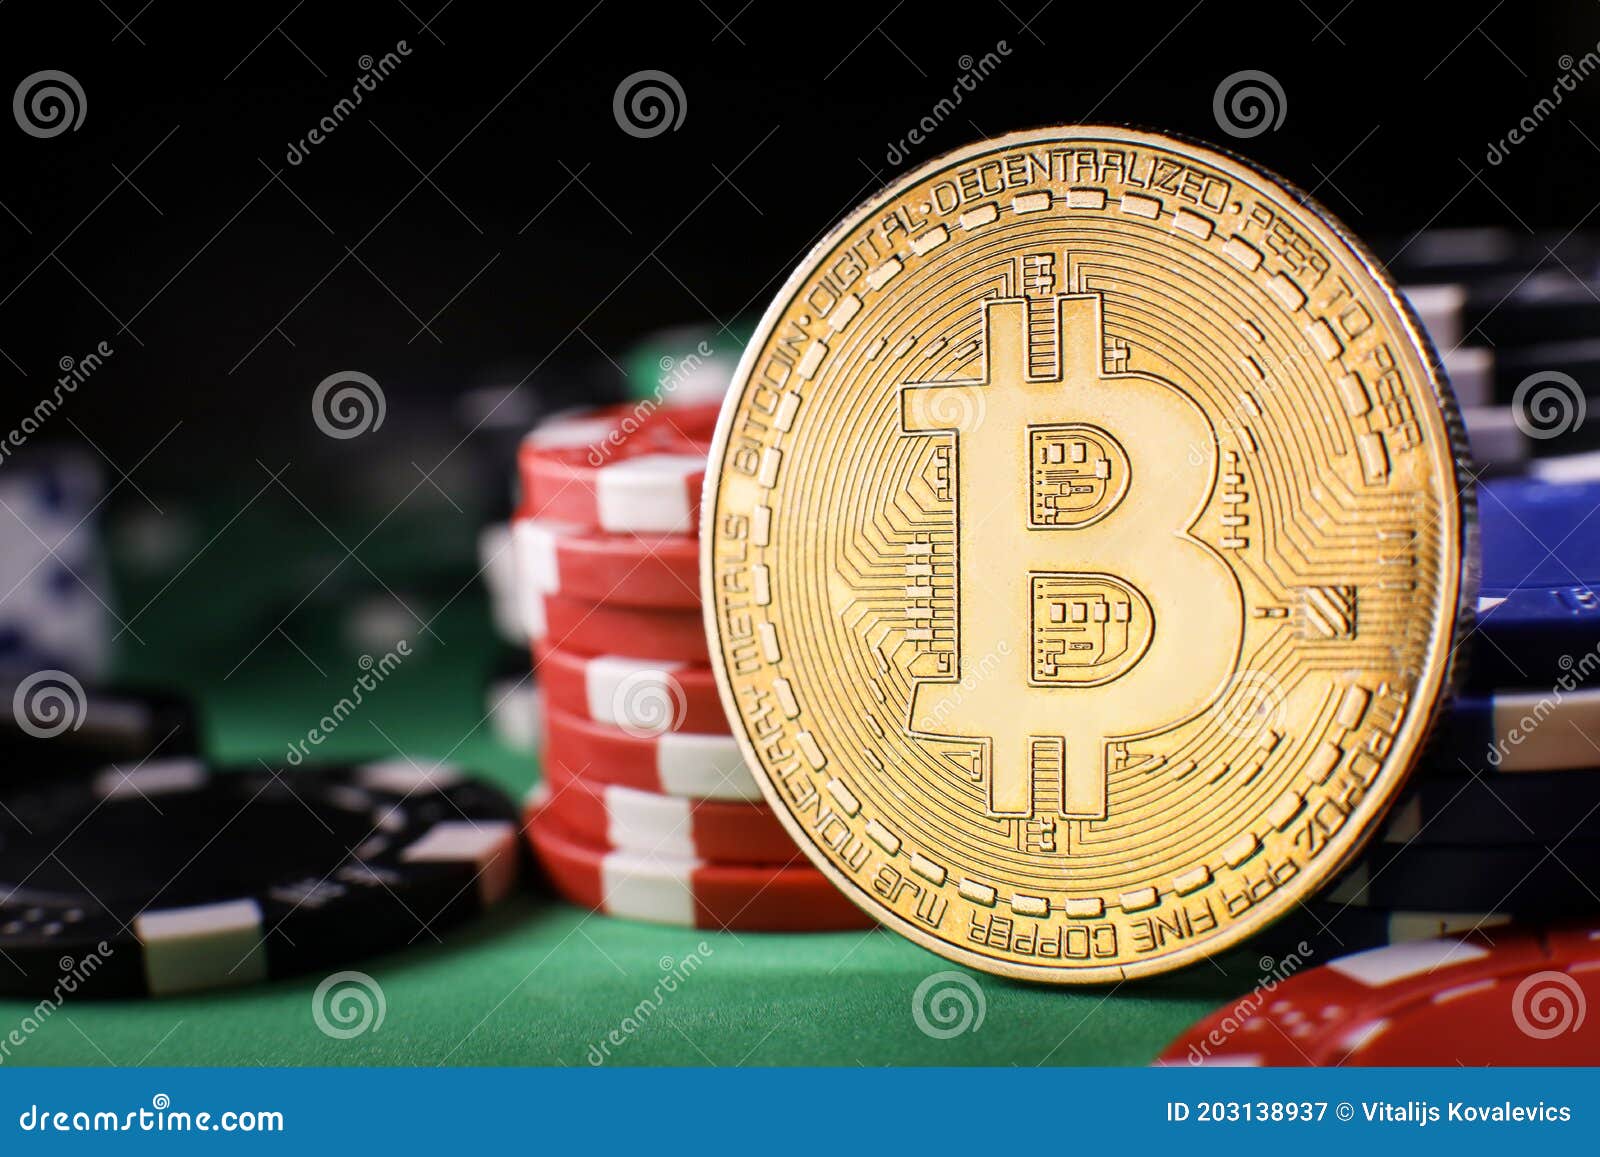 5 Romantic bitcoin casino sites Ideas